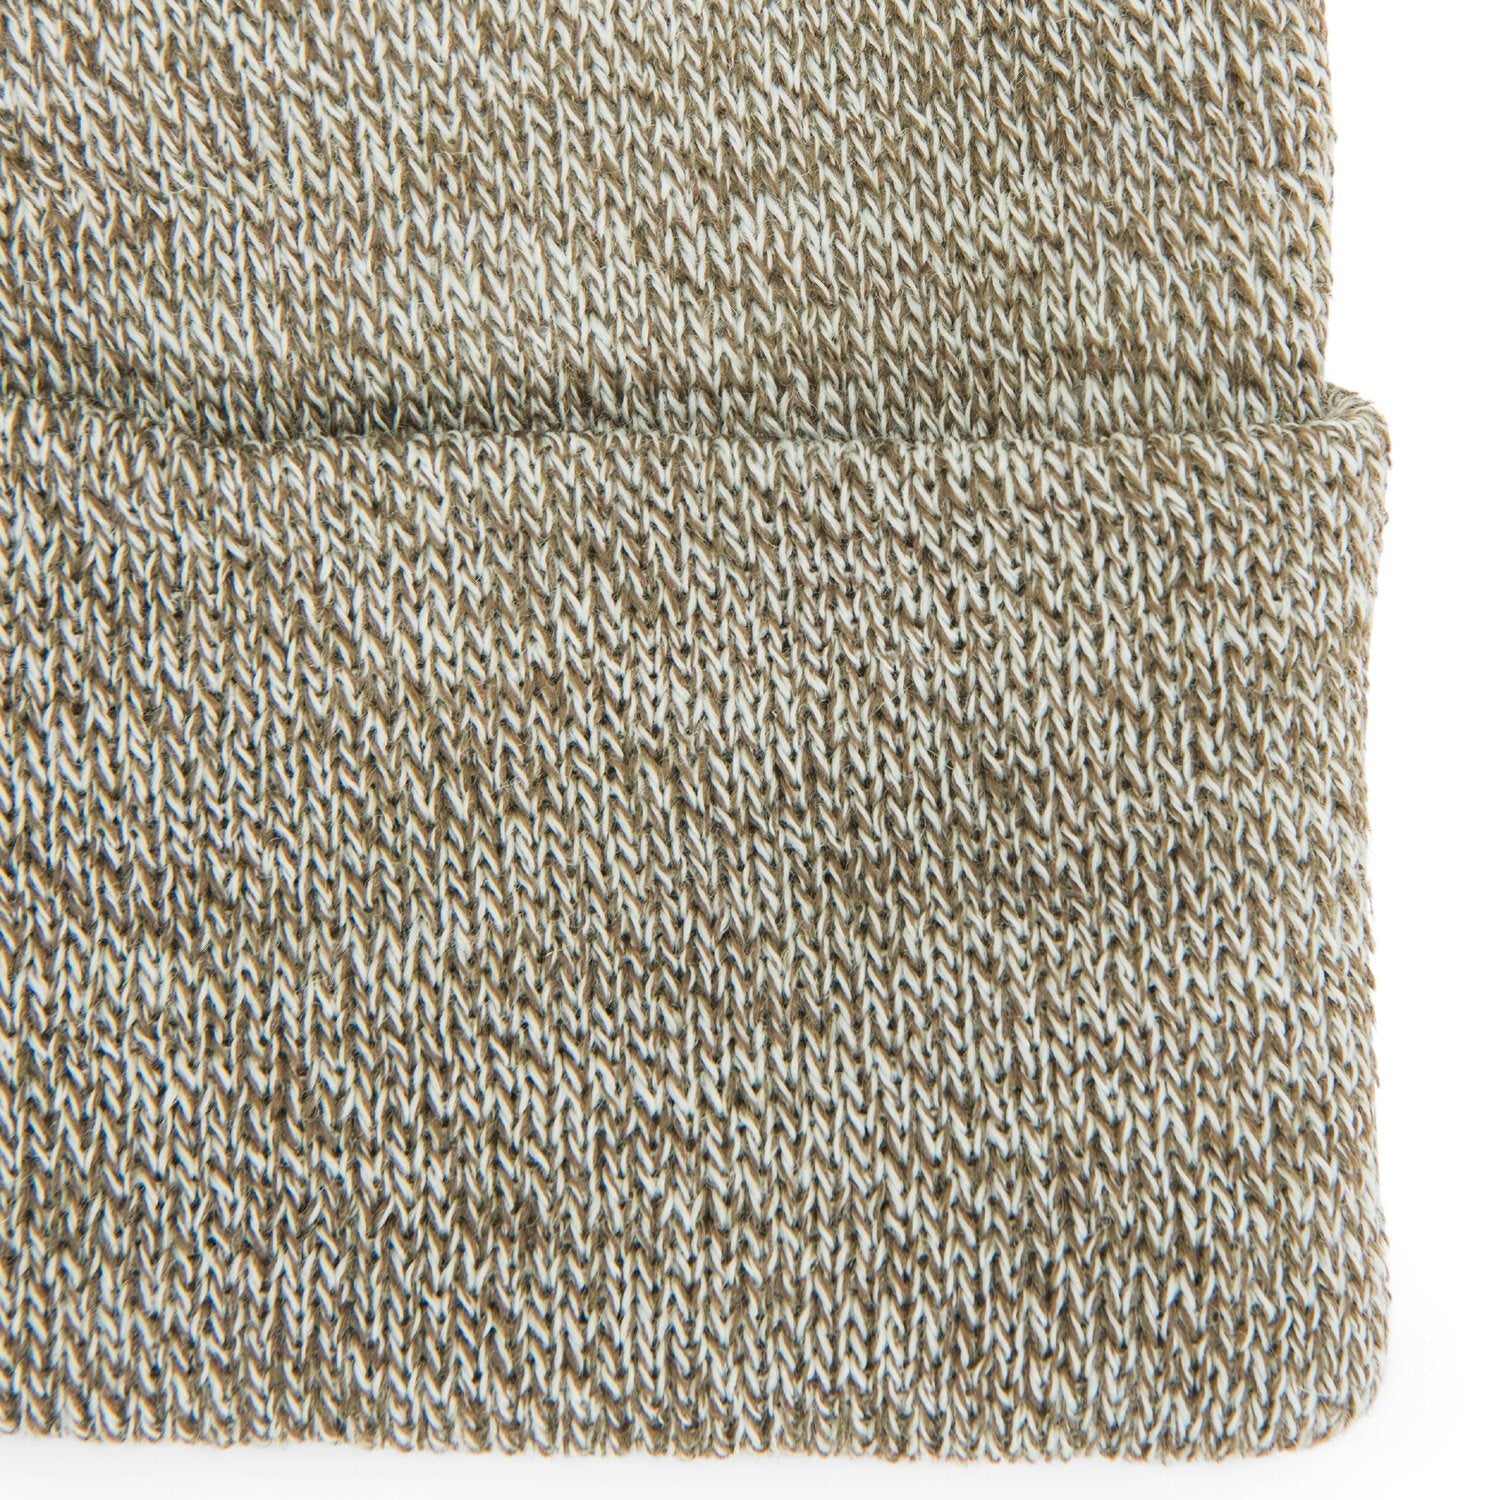 Oslo Acrylic and Wool Cap - Grey Twist brim perspective - made in The USA Wigwam Socks